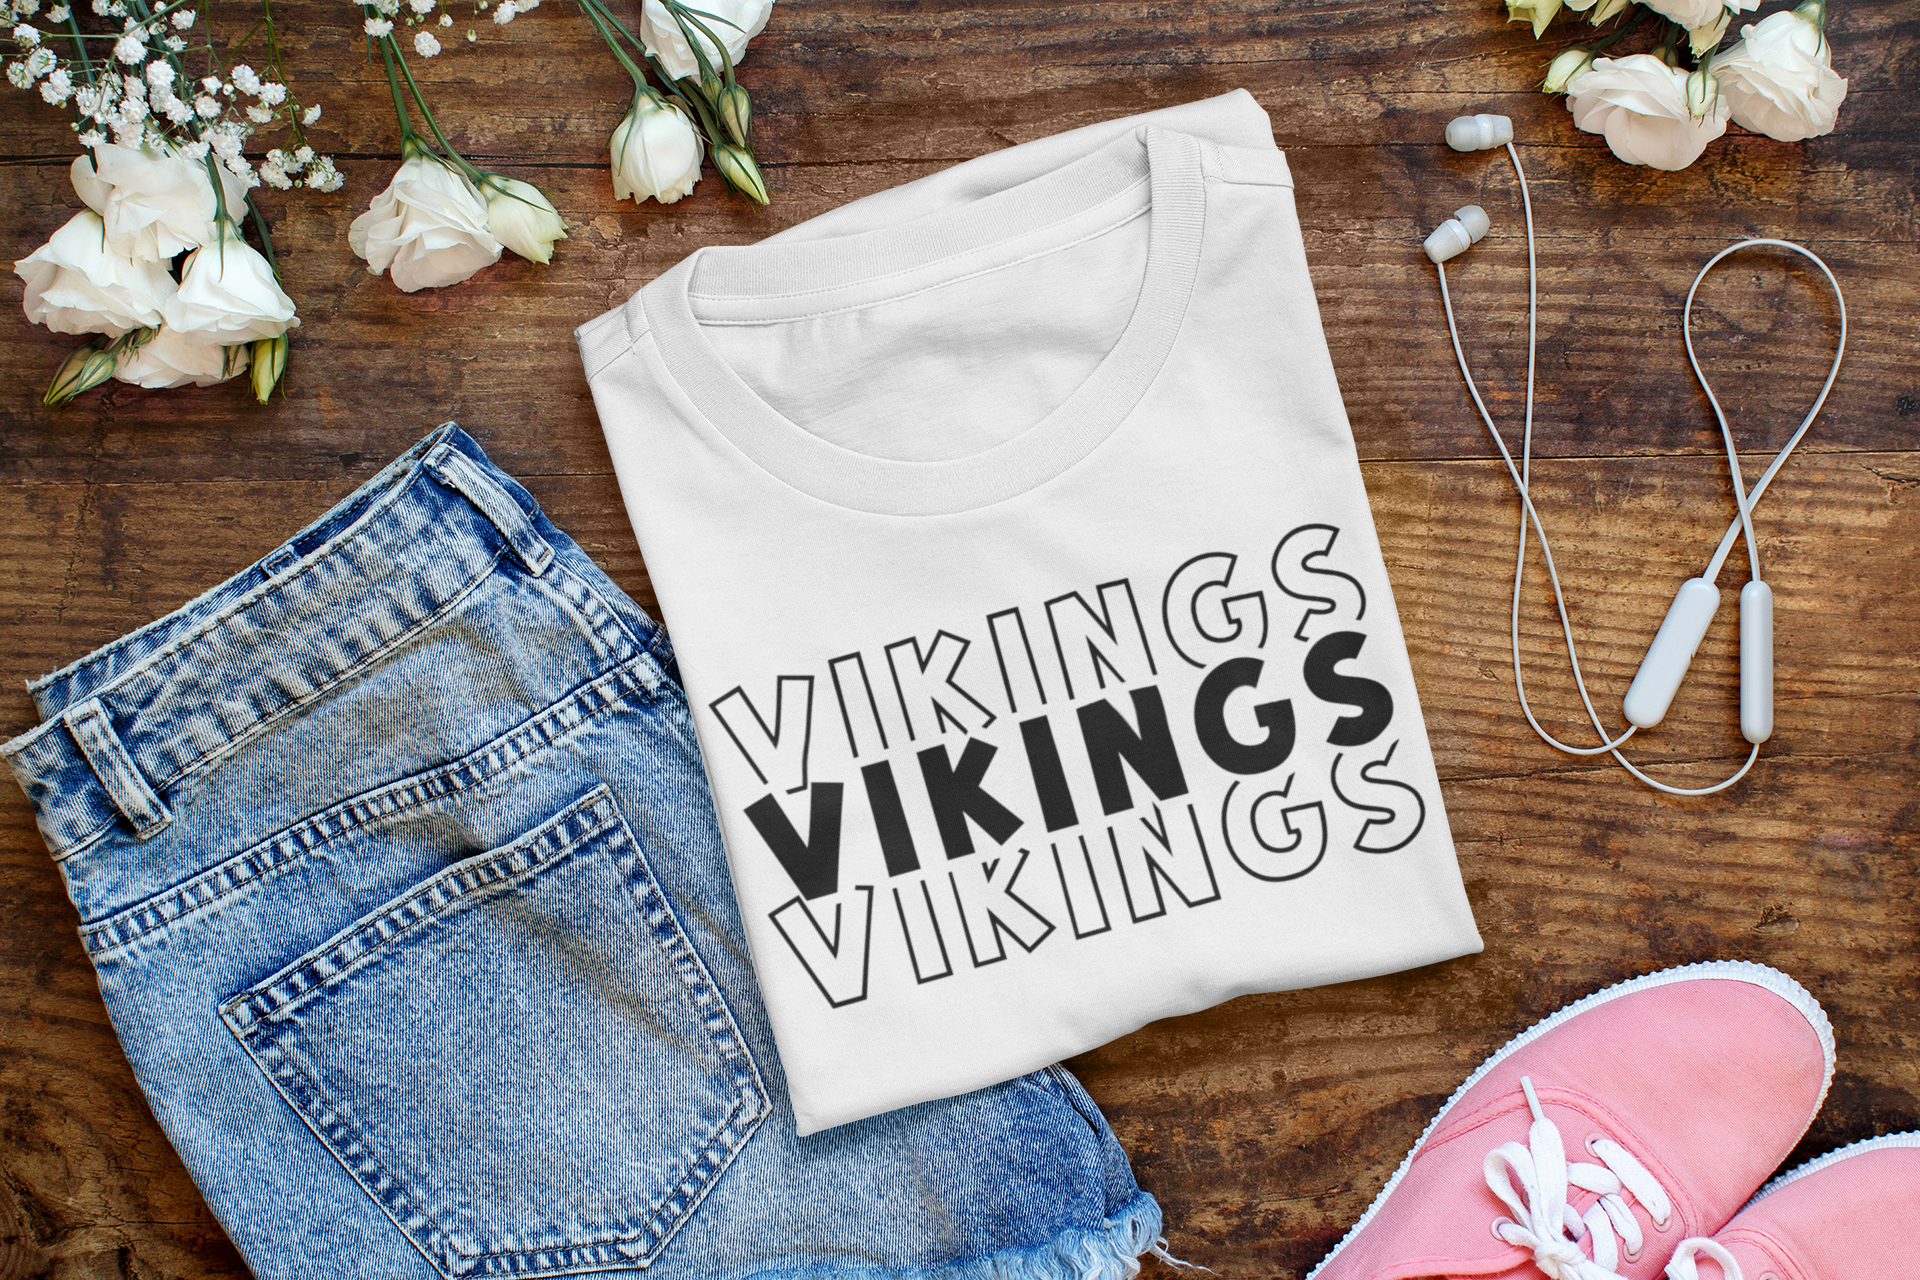 mn vikings apparel near me